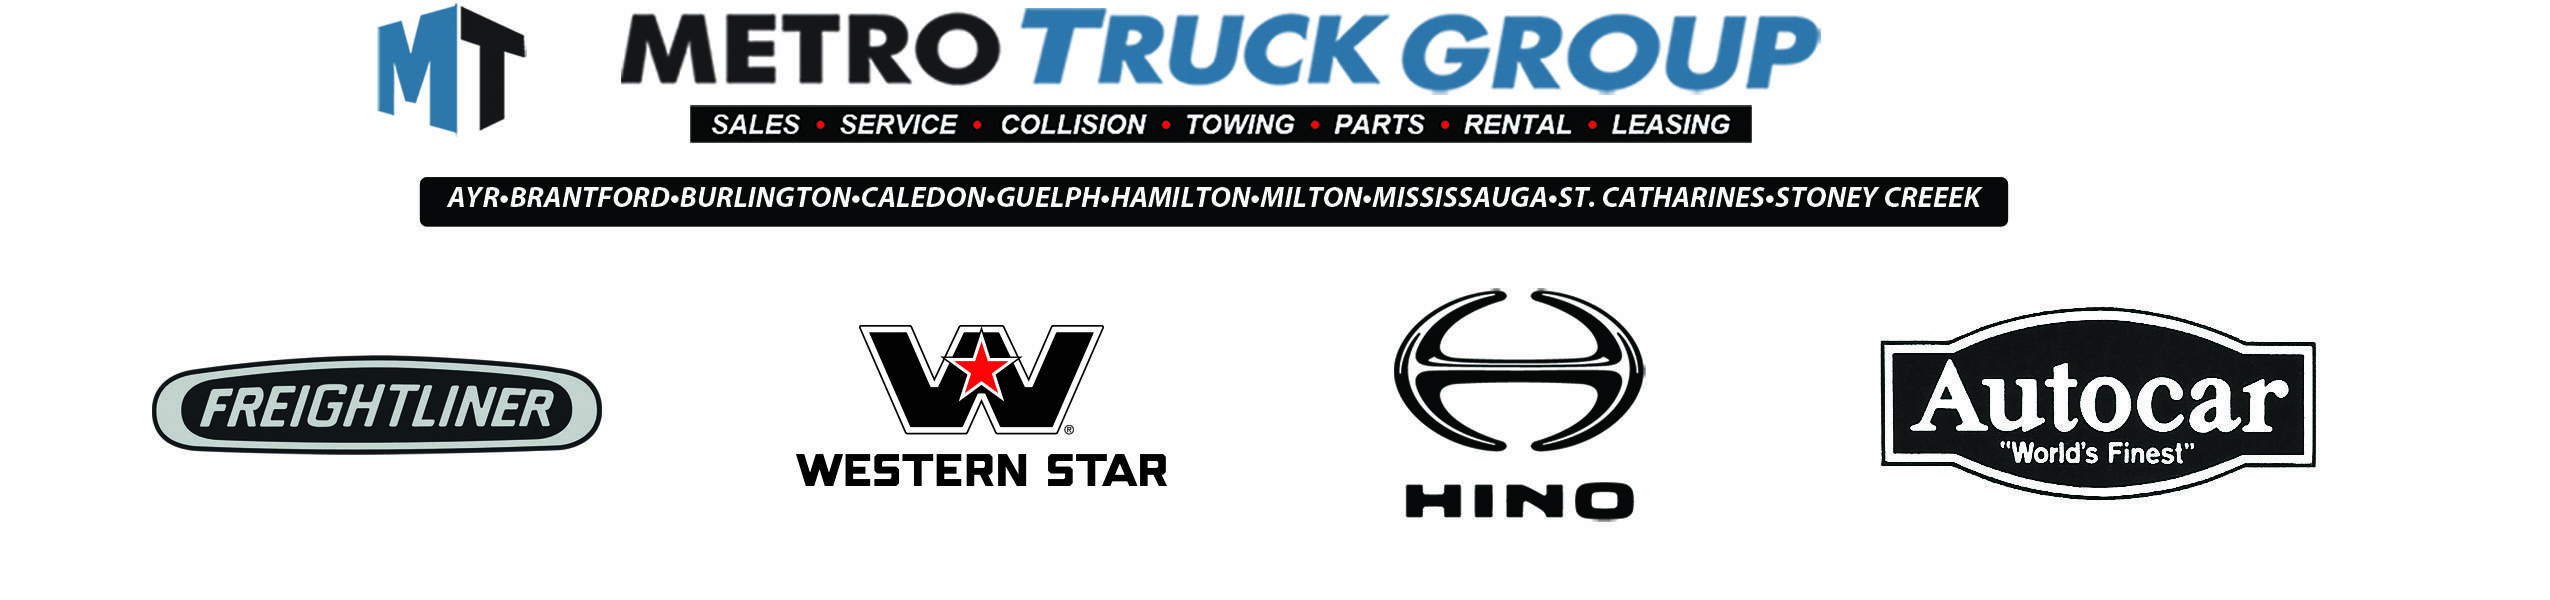 Metro Truck Group